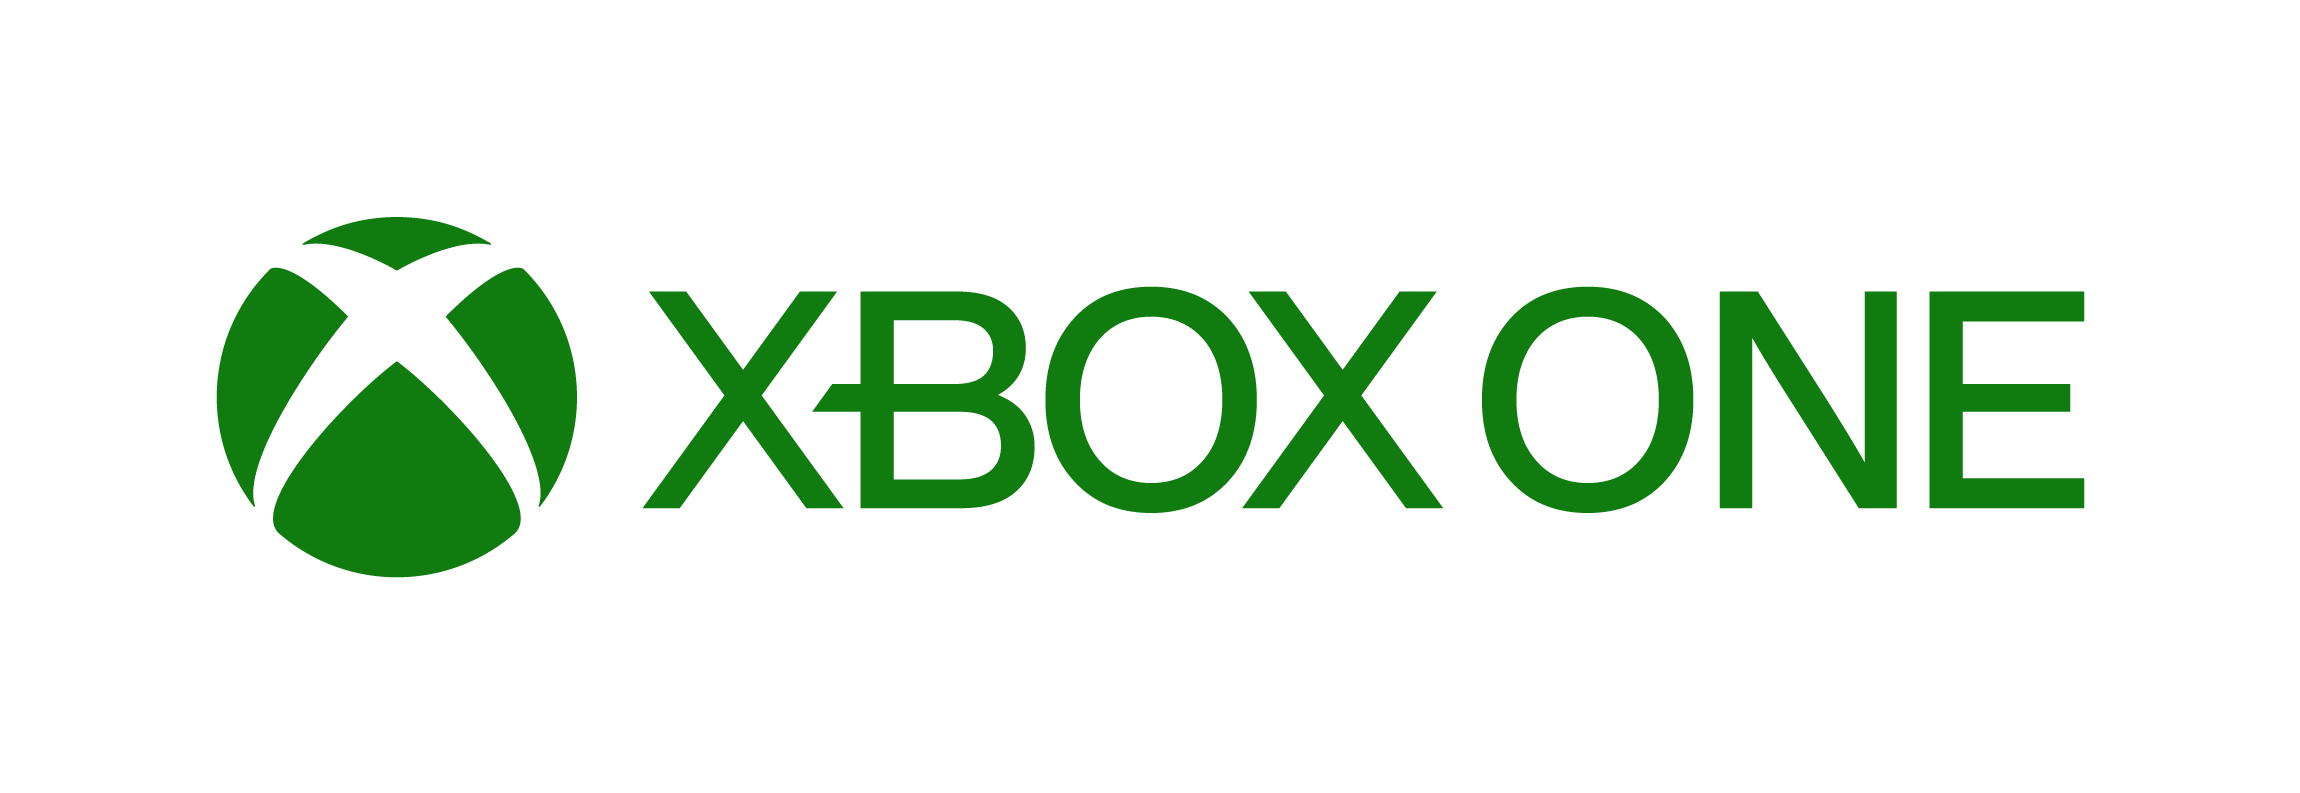 Xbox One spil | Elgiganten